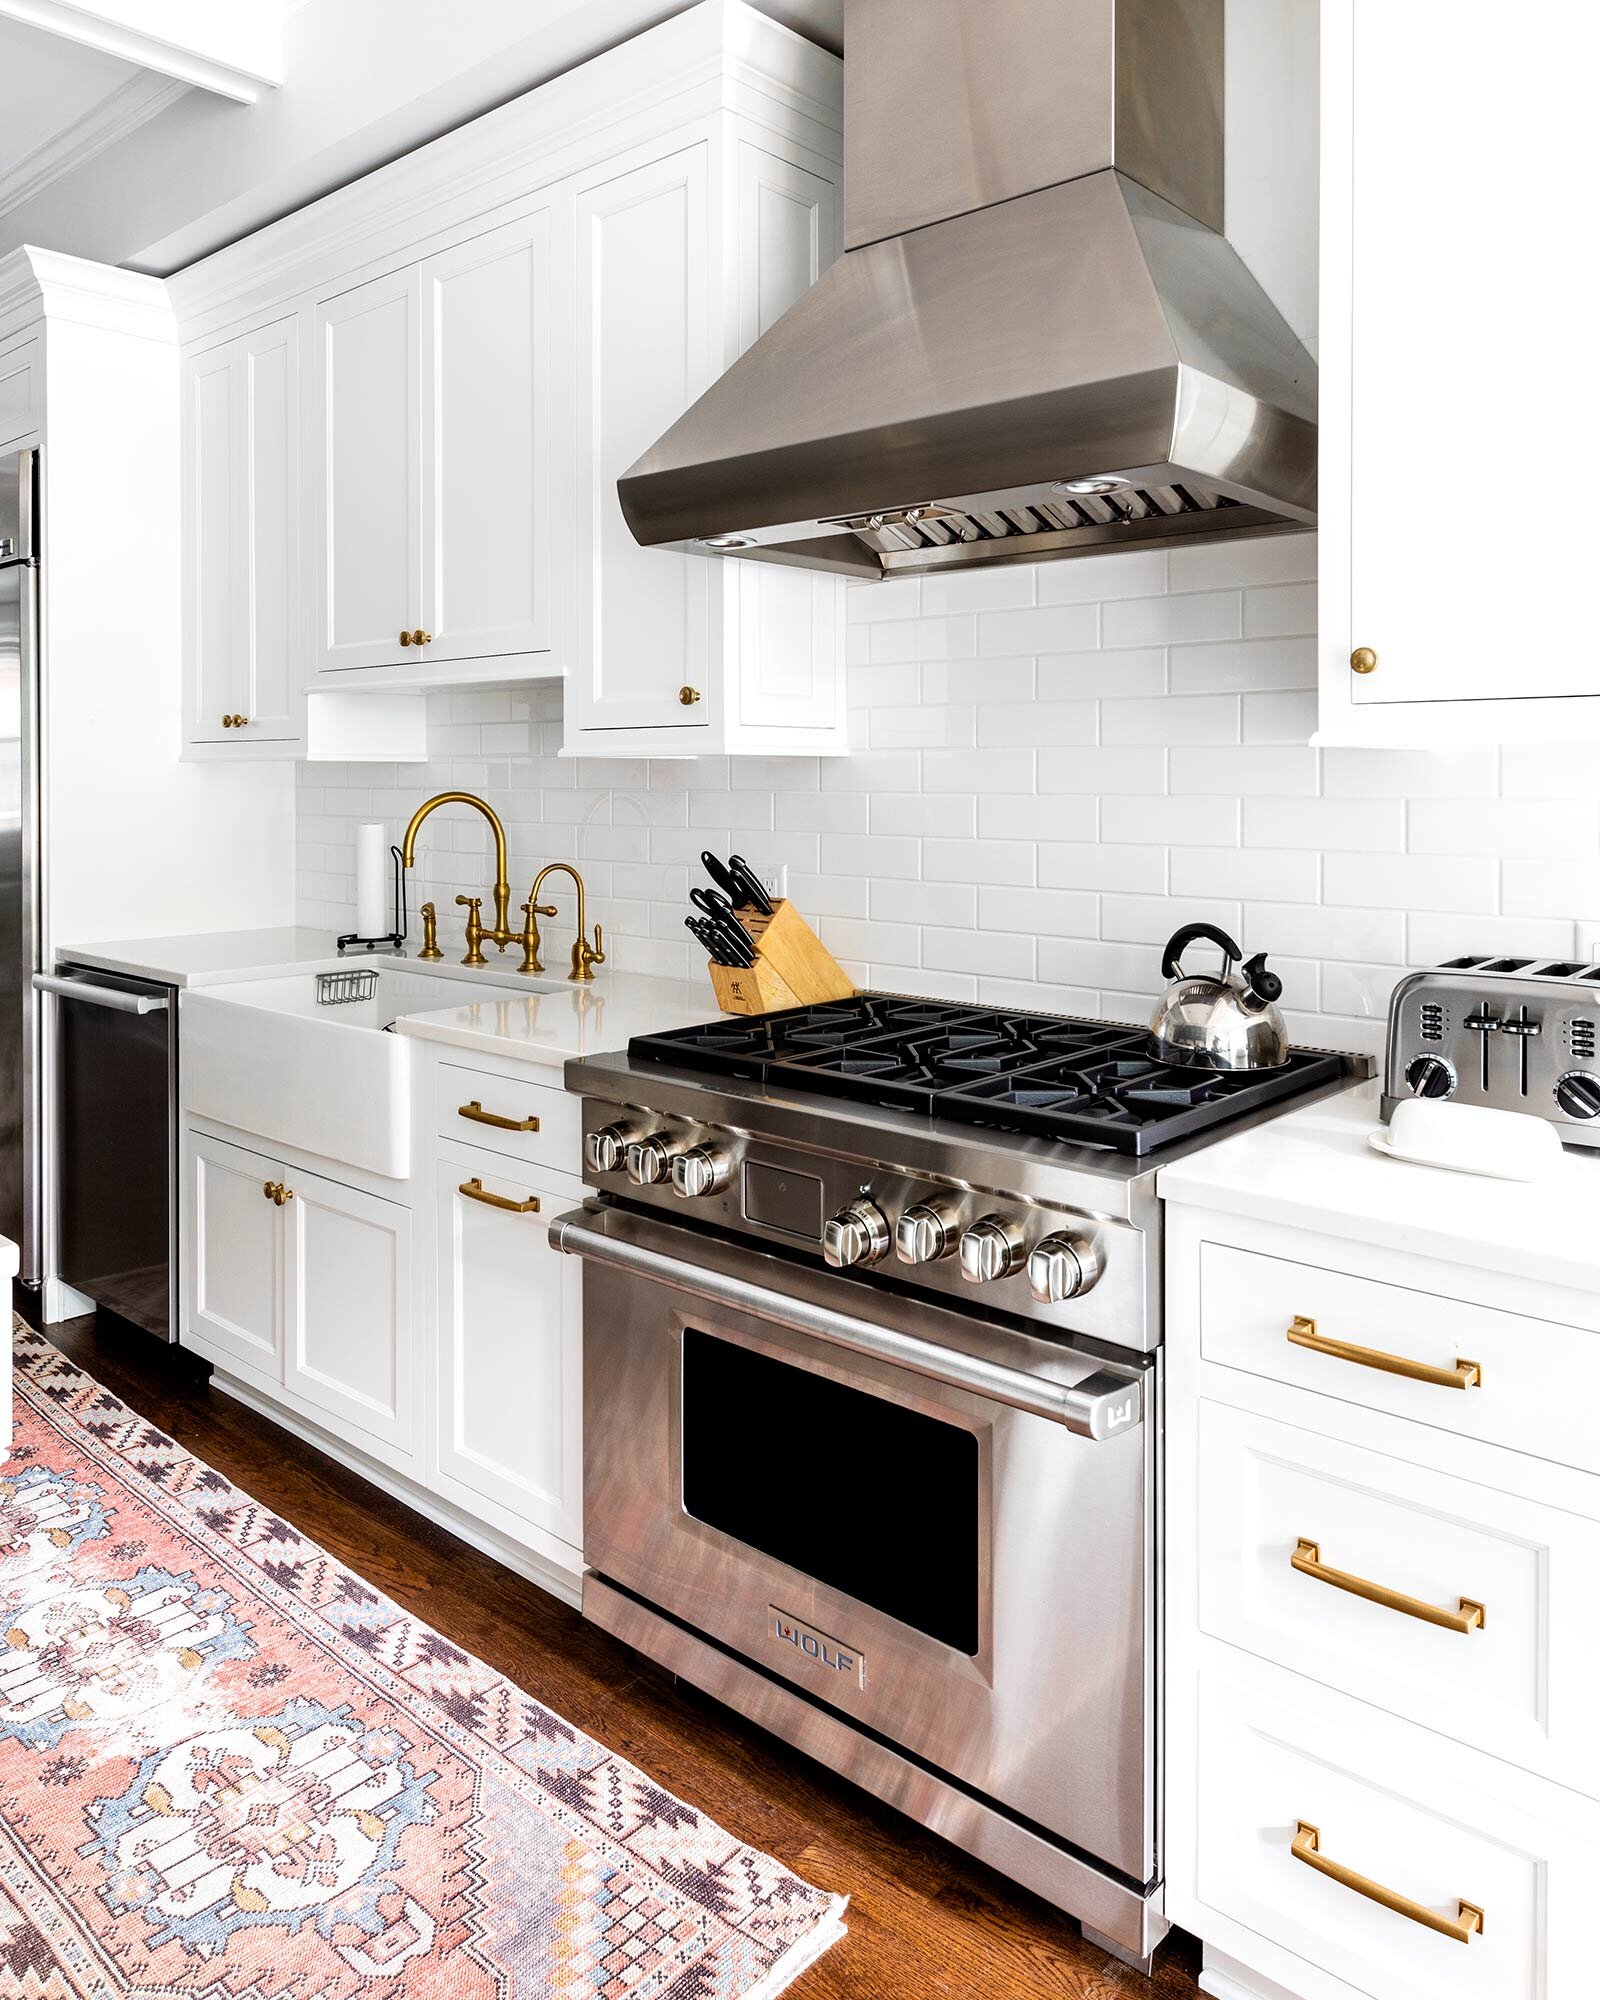 thompson-renovations-contractor-home-kitchen-hoboken-townhouse-interior-design-stove.jpg